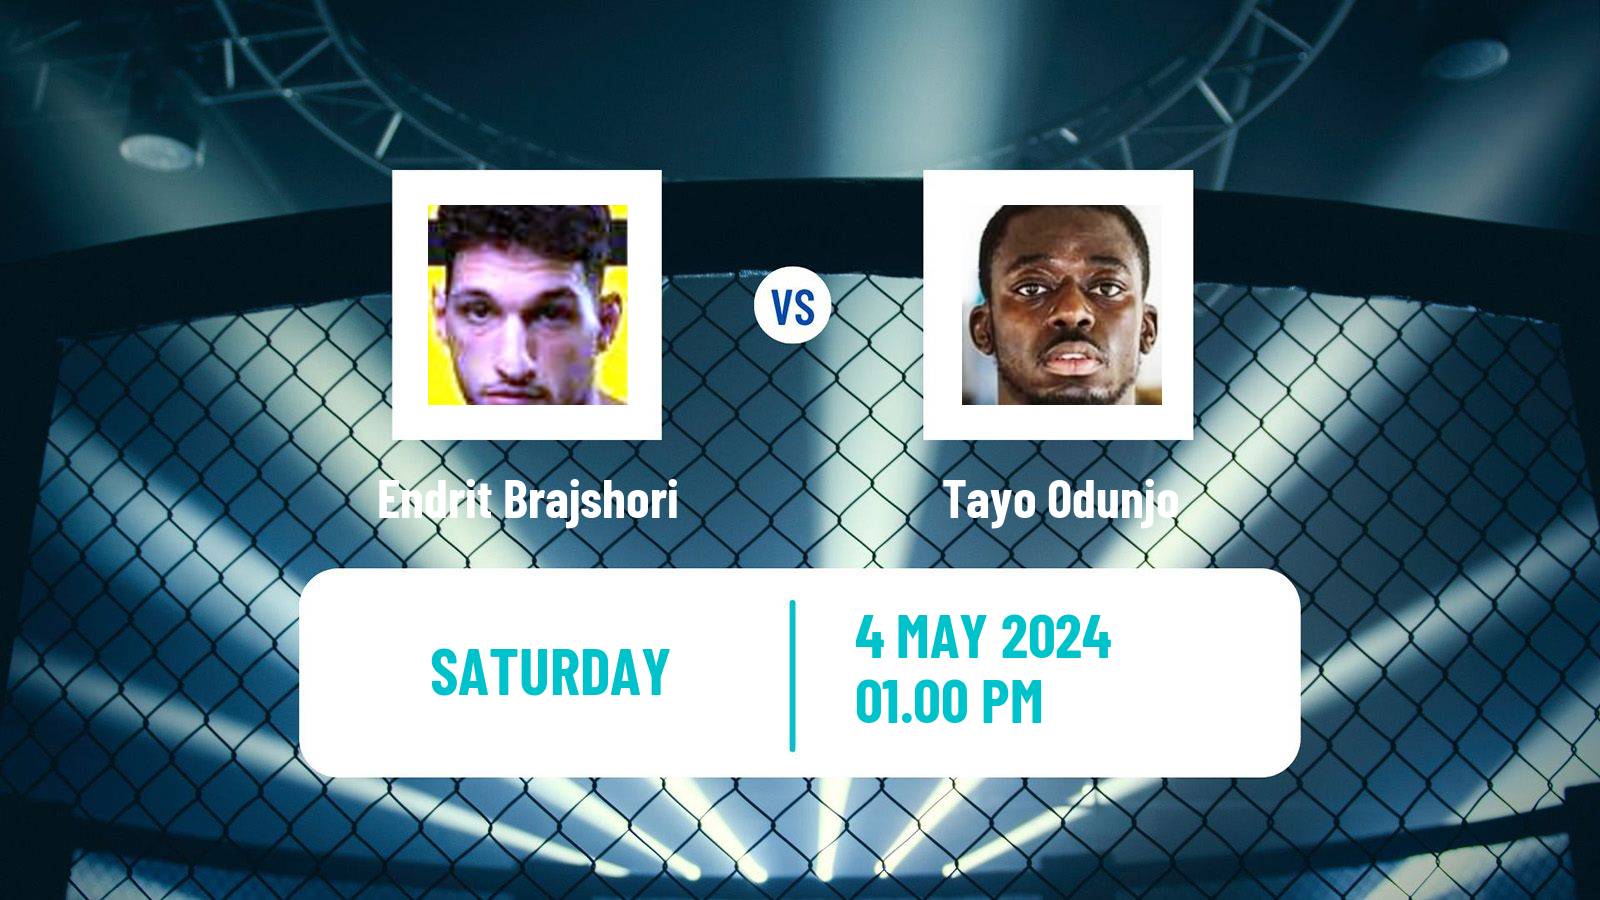 MMA Welterweight Oktagon Men Endrit Brajshori - Tayo Odunjo